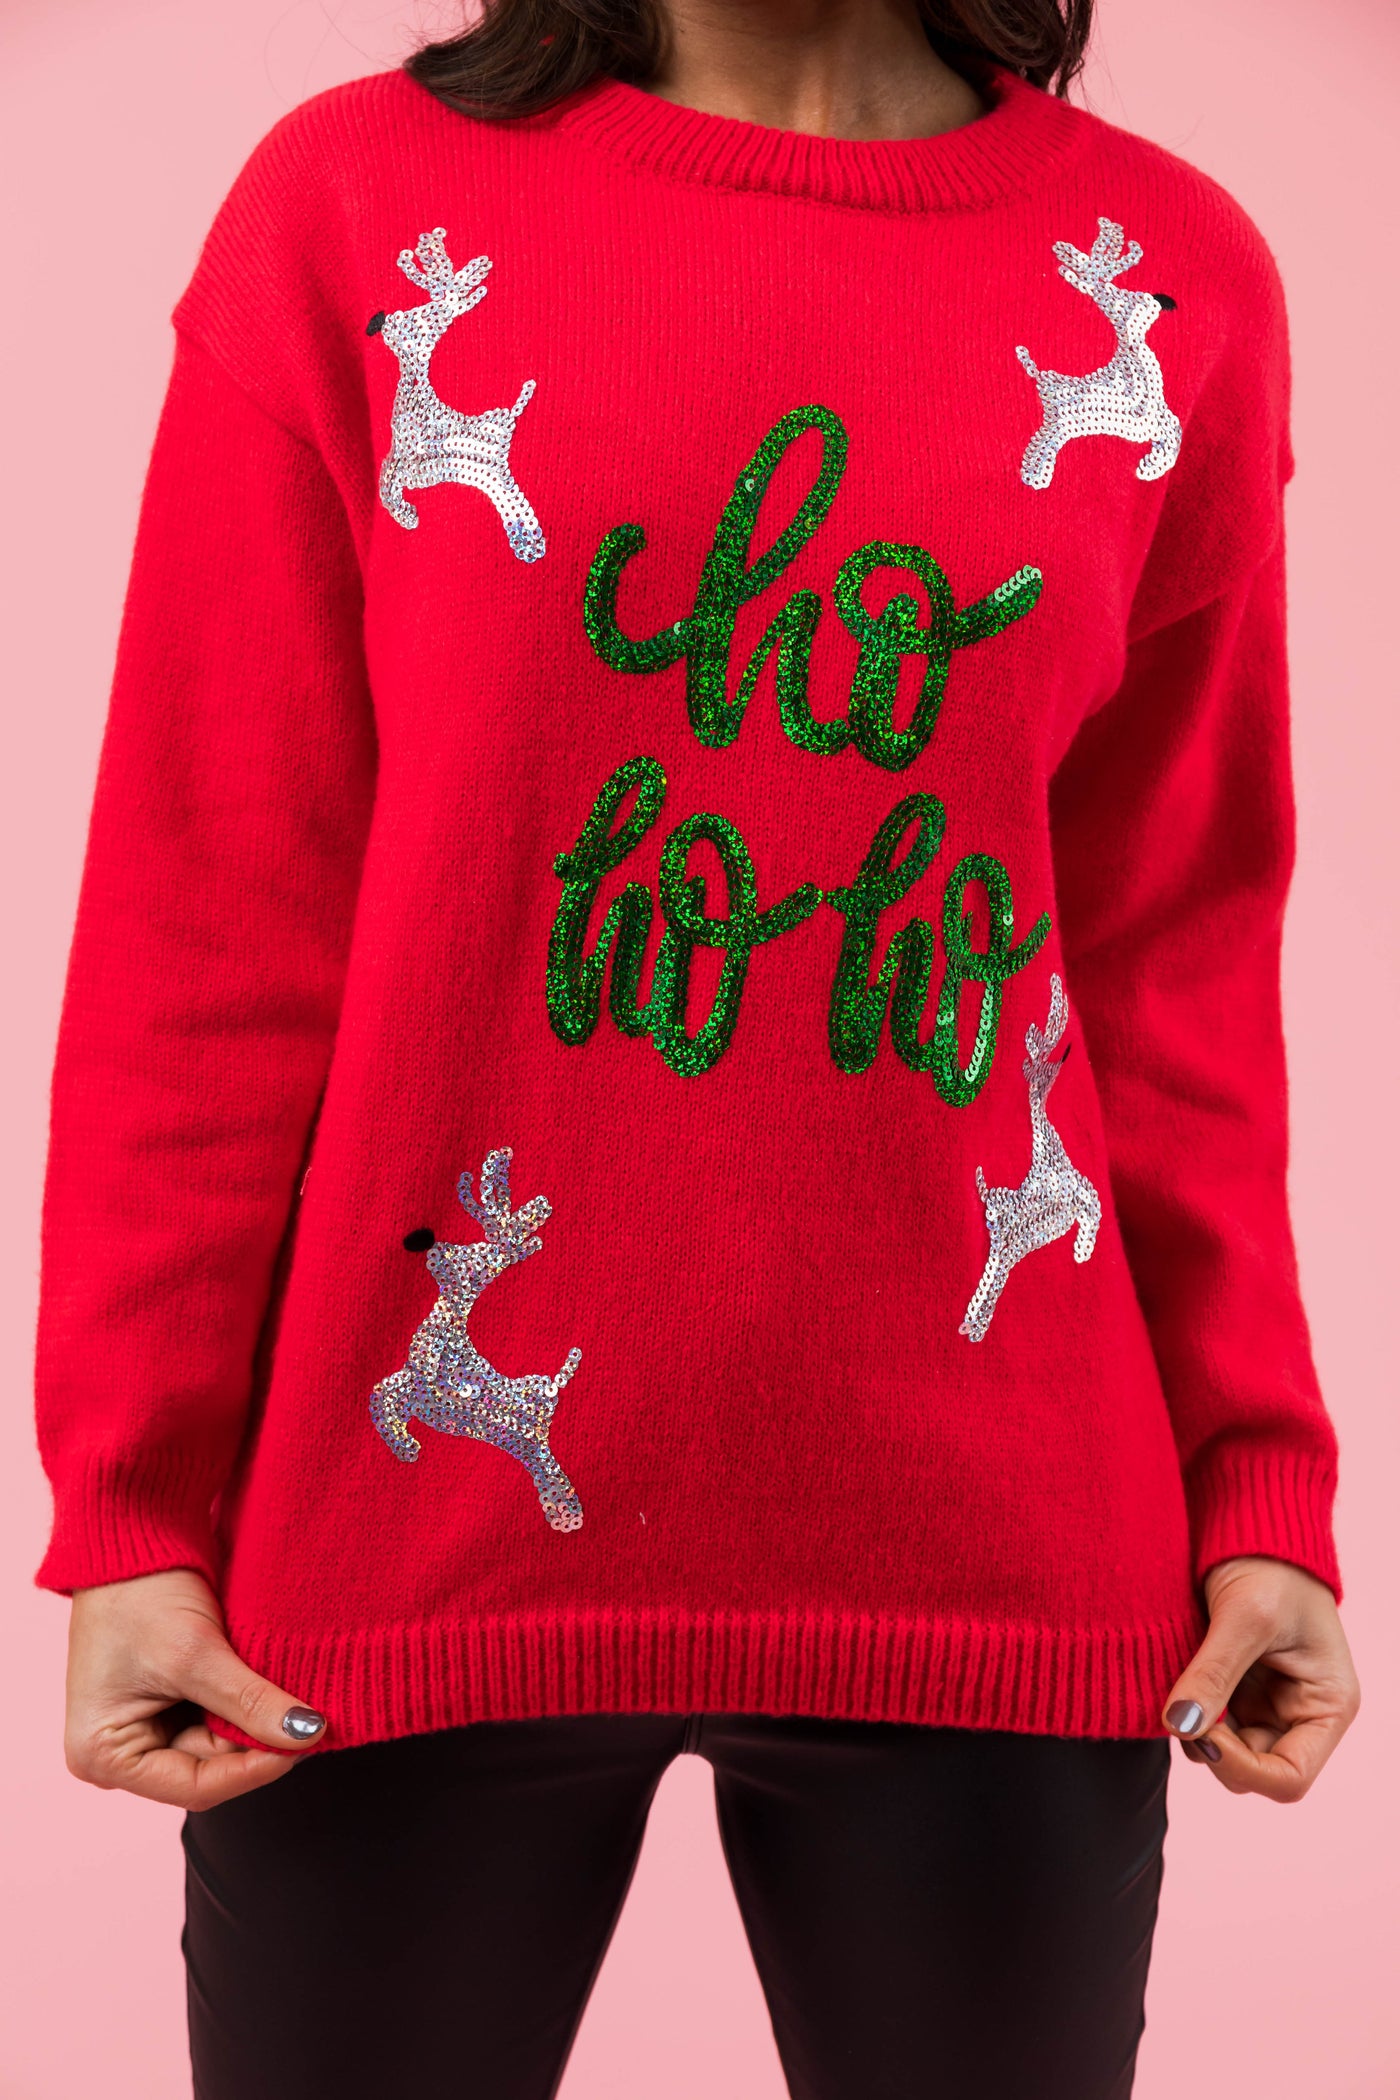 Lipstick Sequin 'Ho Ho Ho' Christmas Sweater